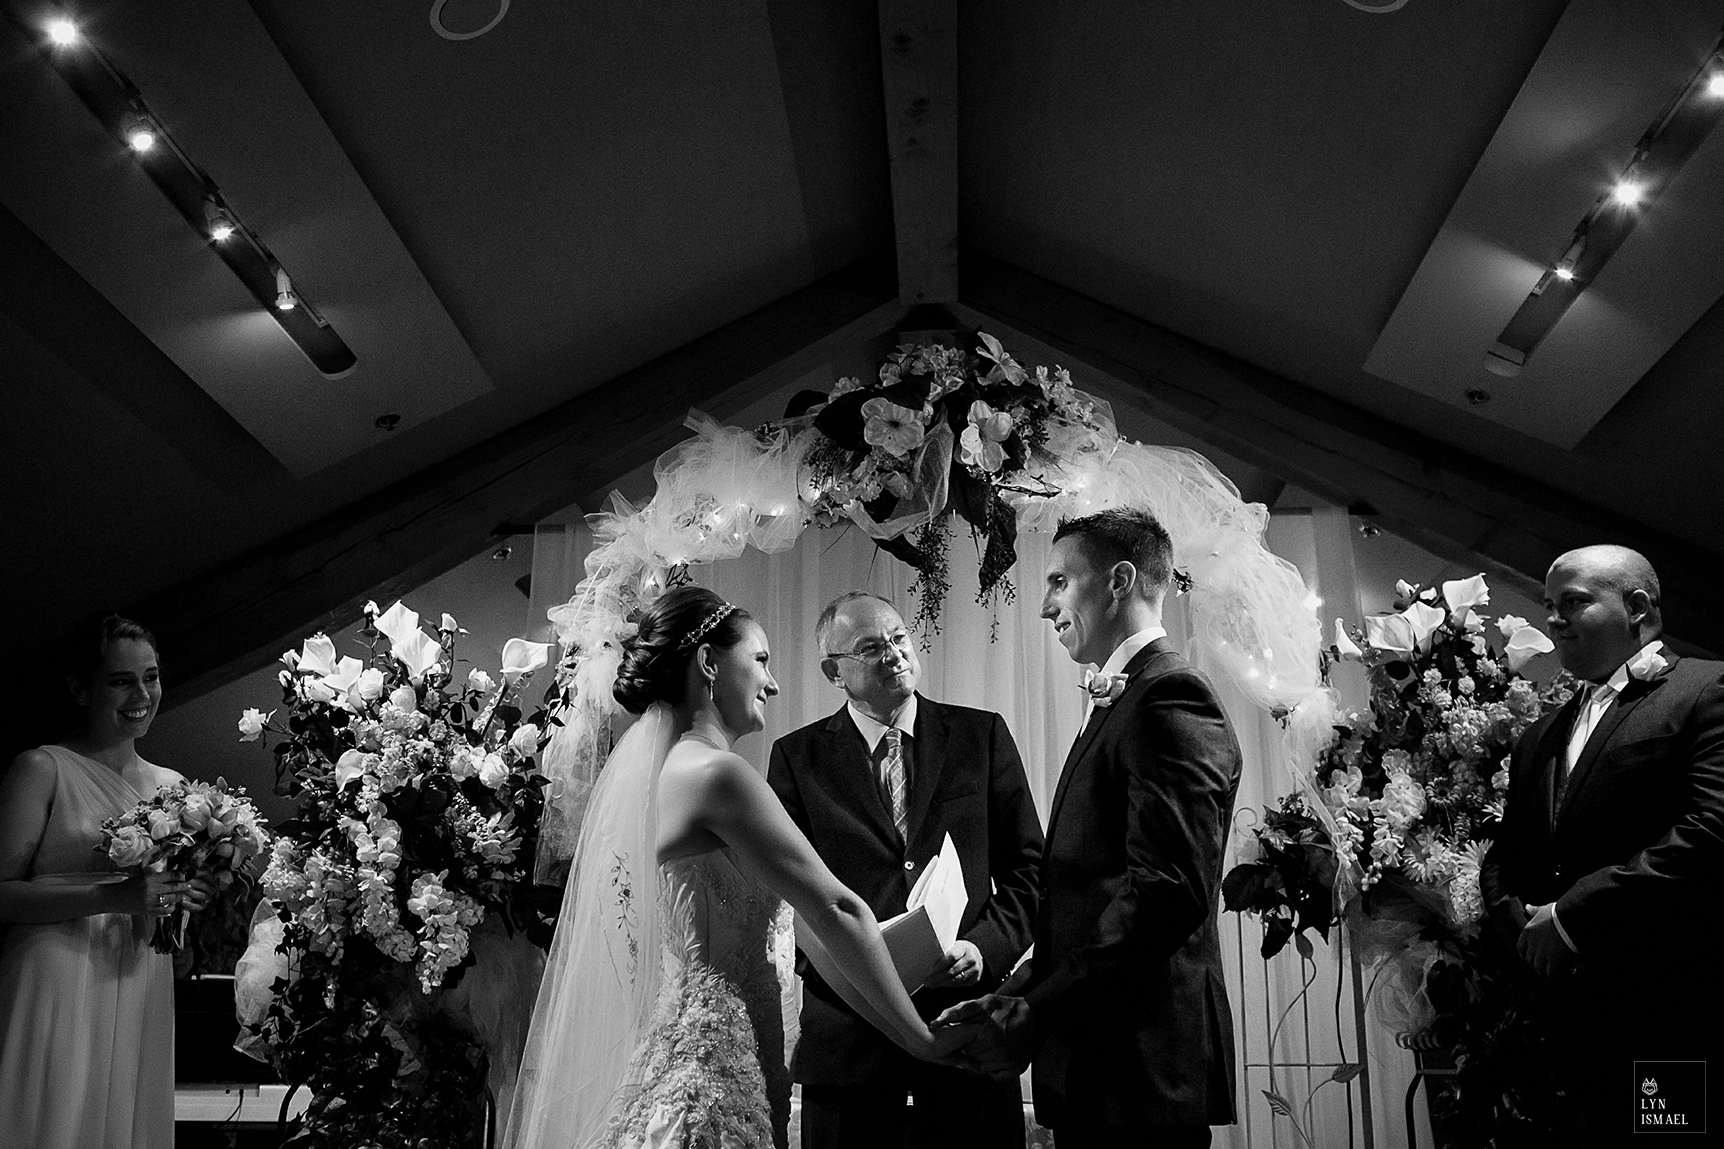 An indoor wedding ceremony in Dundurn Castle in Hamilton.